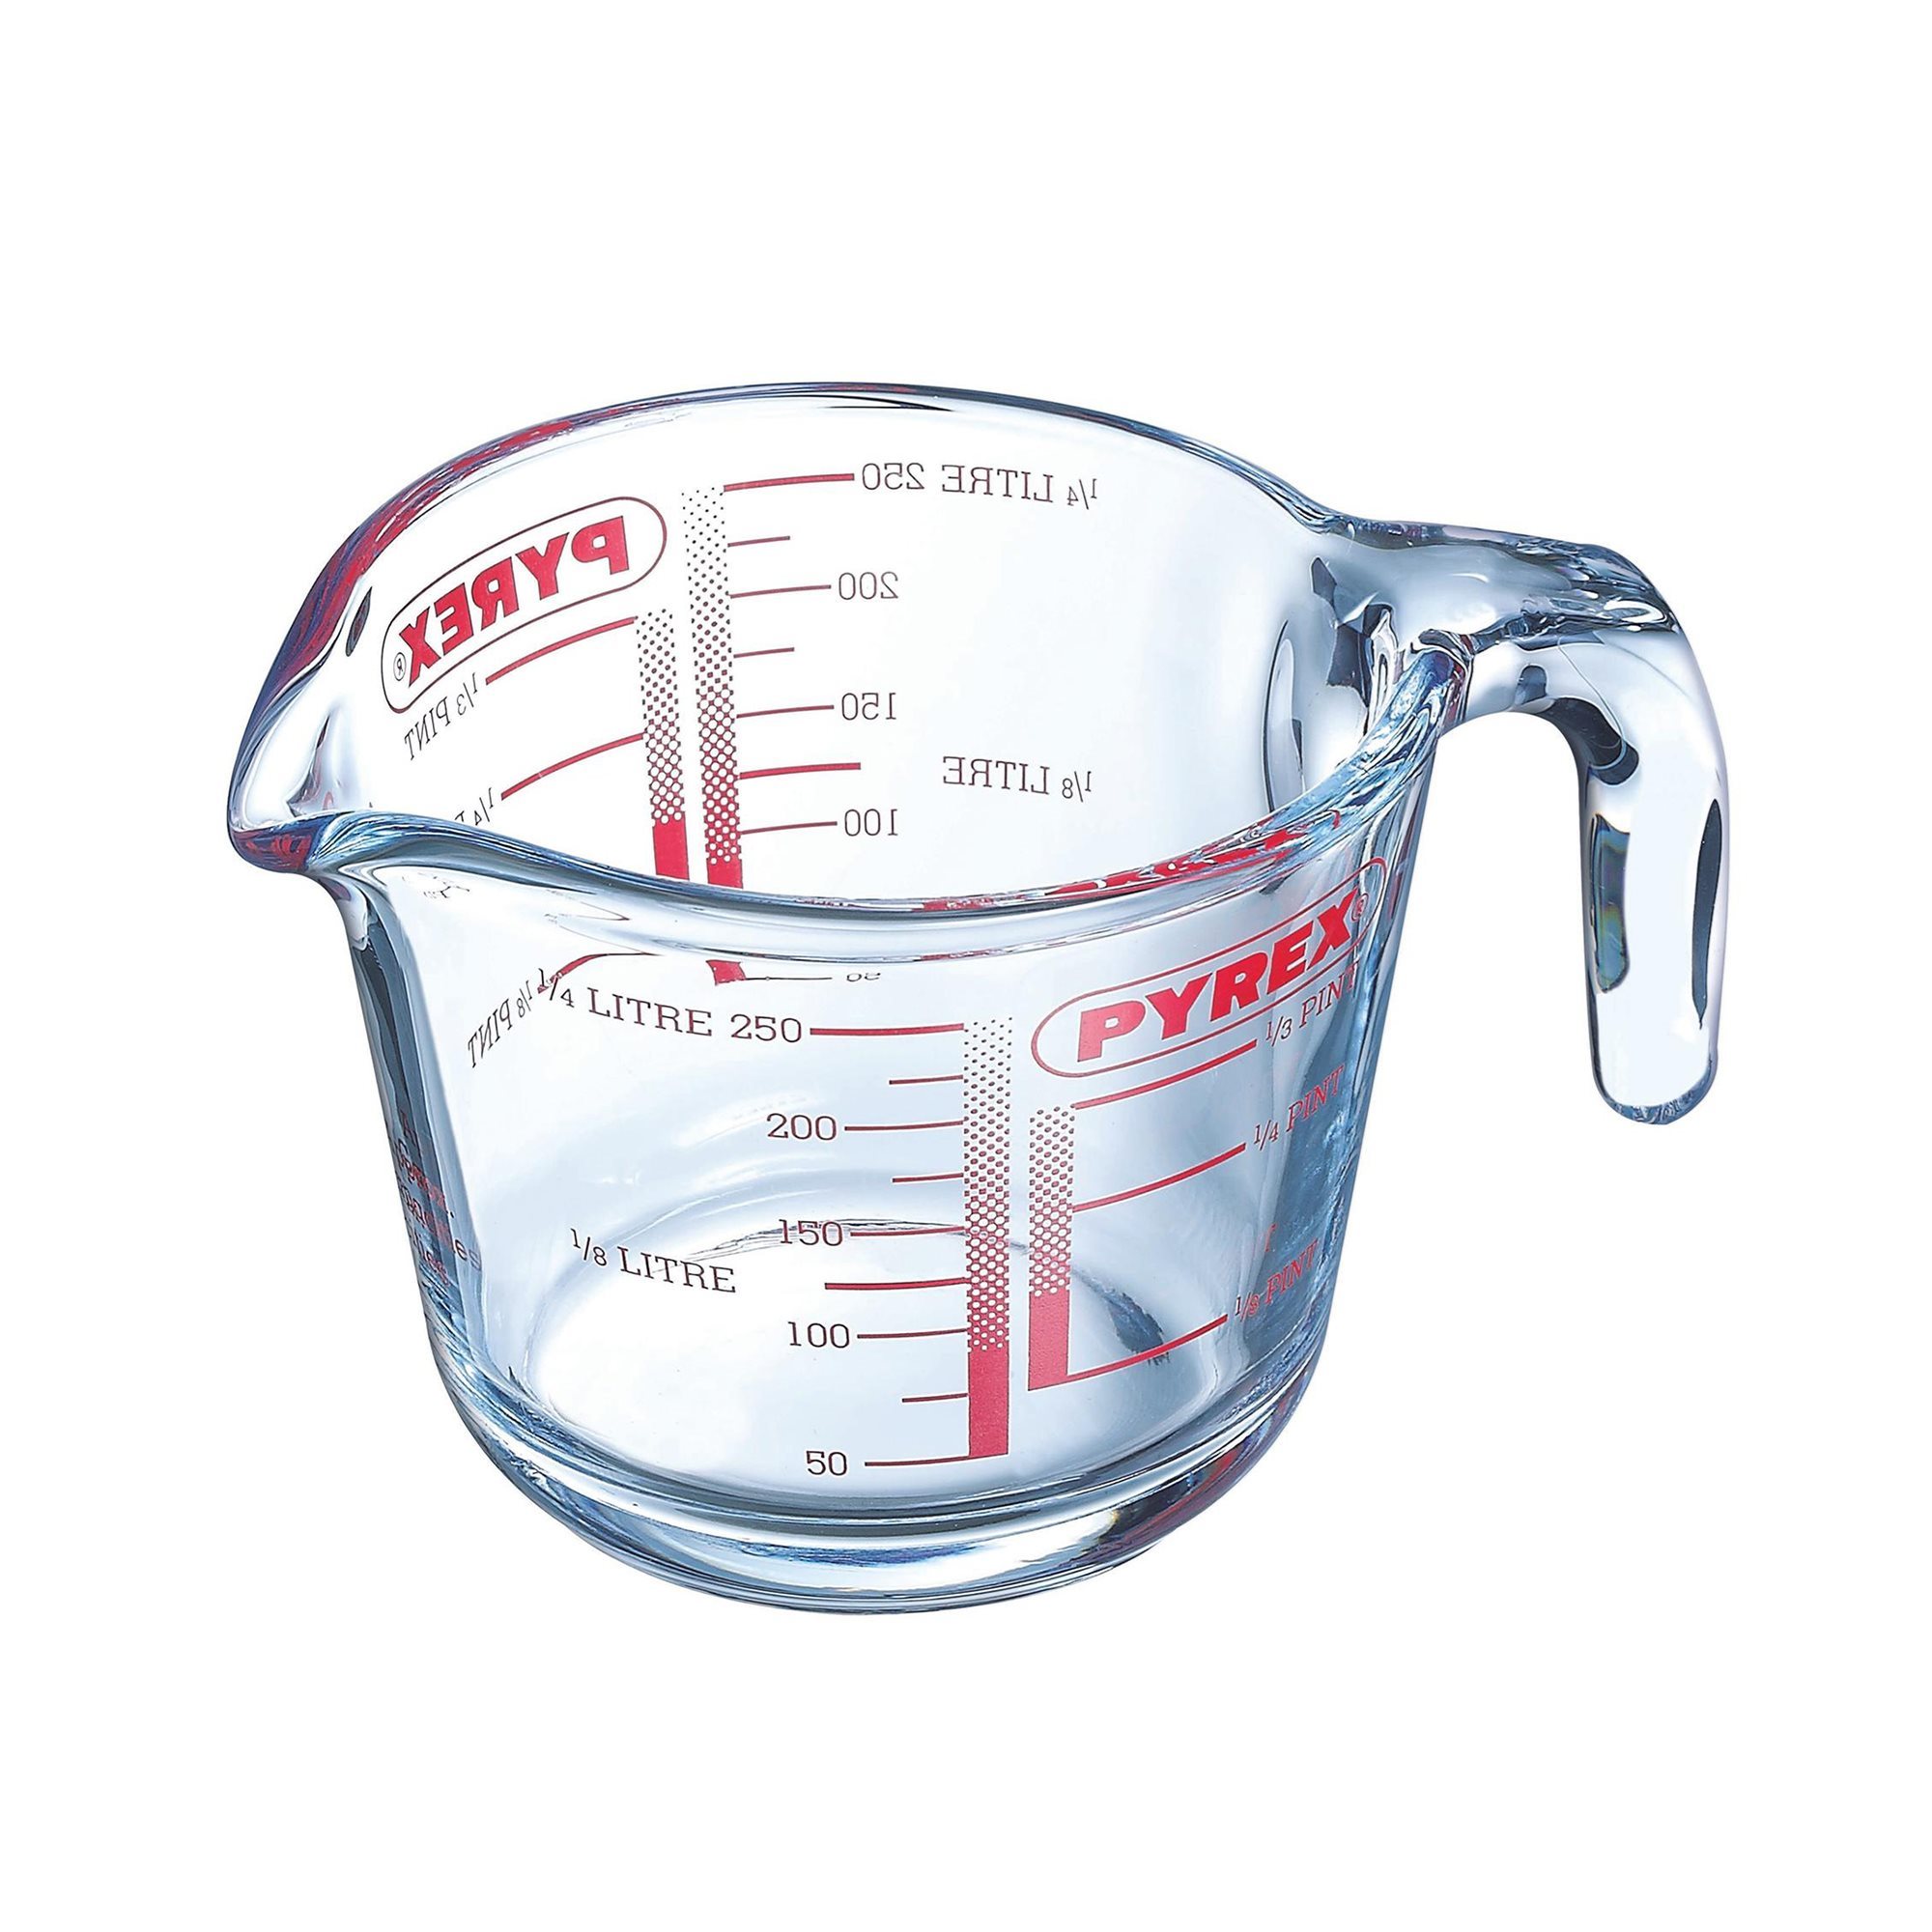 250/500ml Glass Measuring Cup Milk Jug Heat Resistant Glass Cup